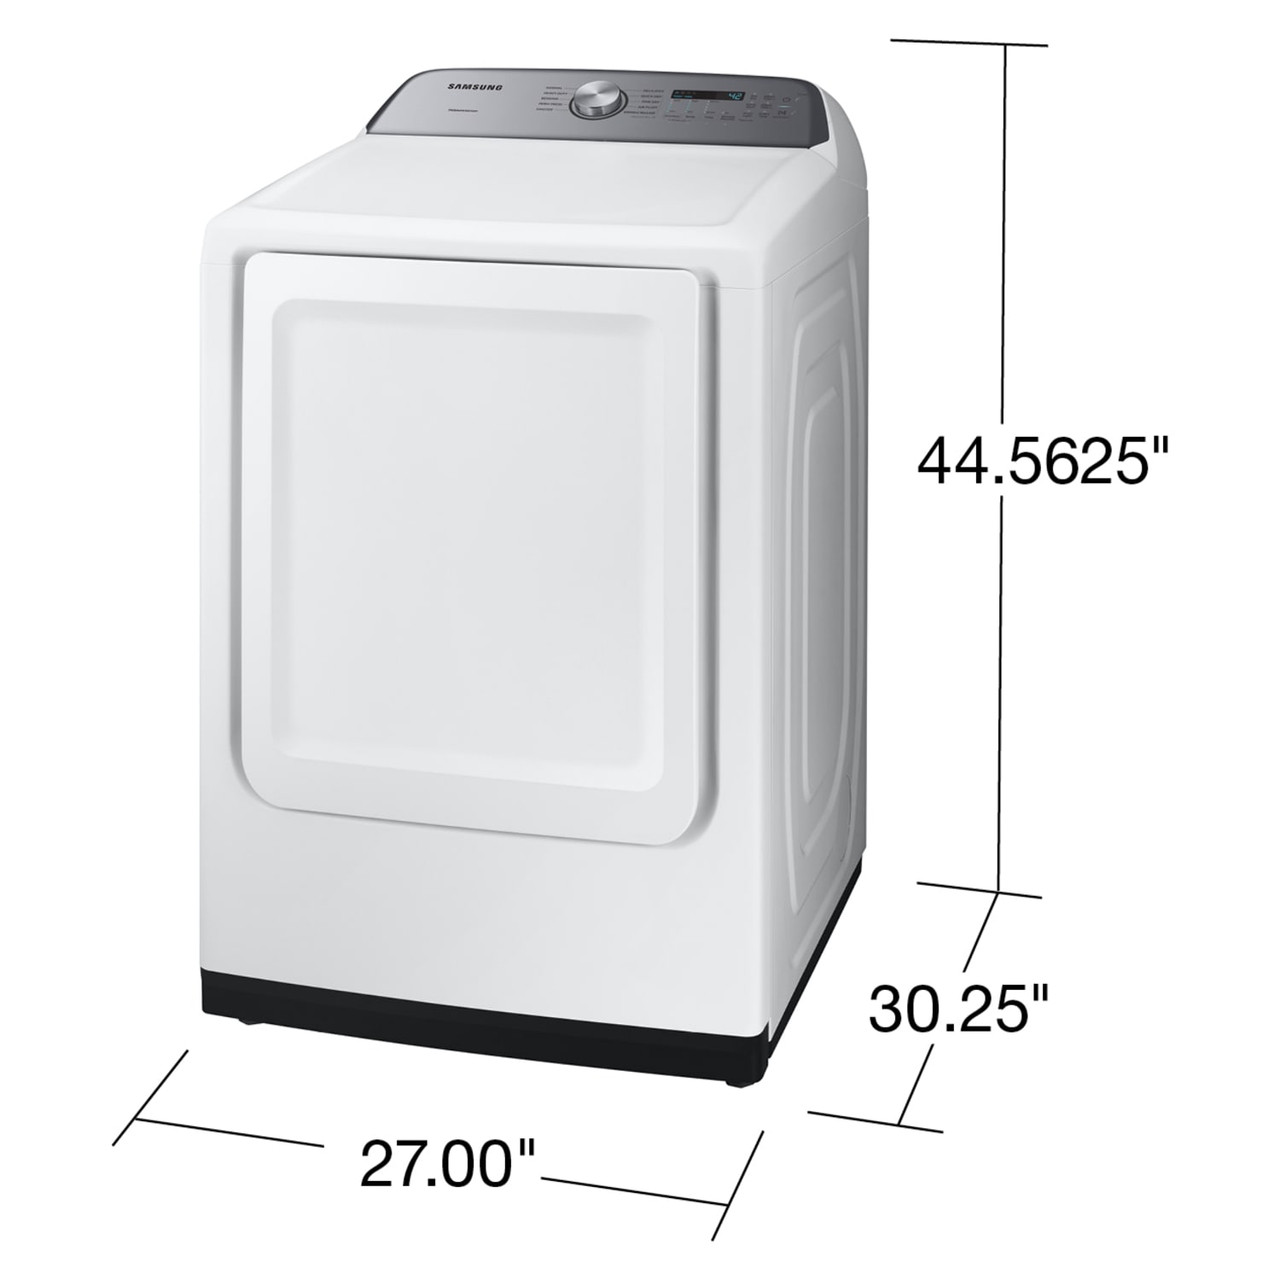 Samsung 7.4 cu. ft. Electric Dryer with Sensor Dry - DVE50R5200W